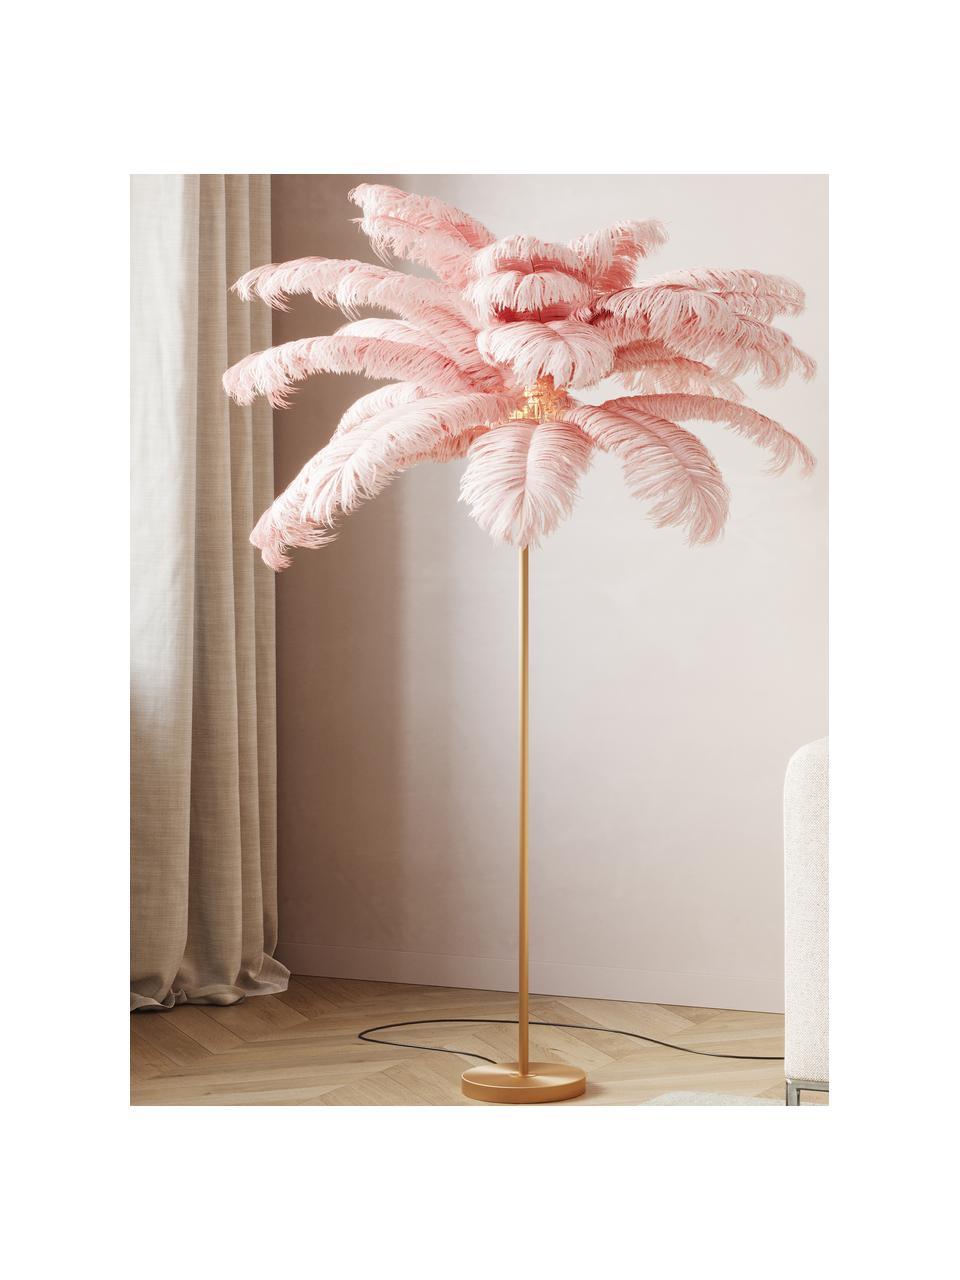 Vloerlamp Feather Palm, Lampenkap: struisvogelveren, Goudkleurig, roze, H 165 cm